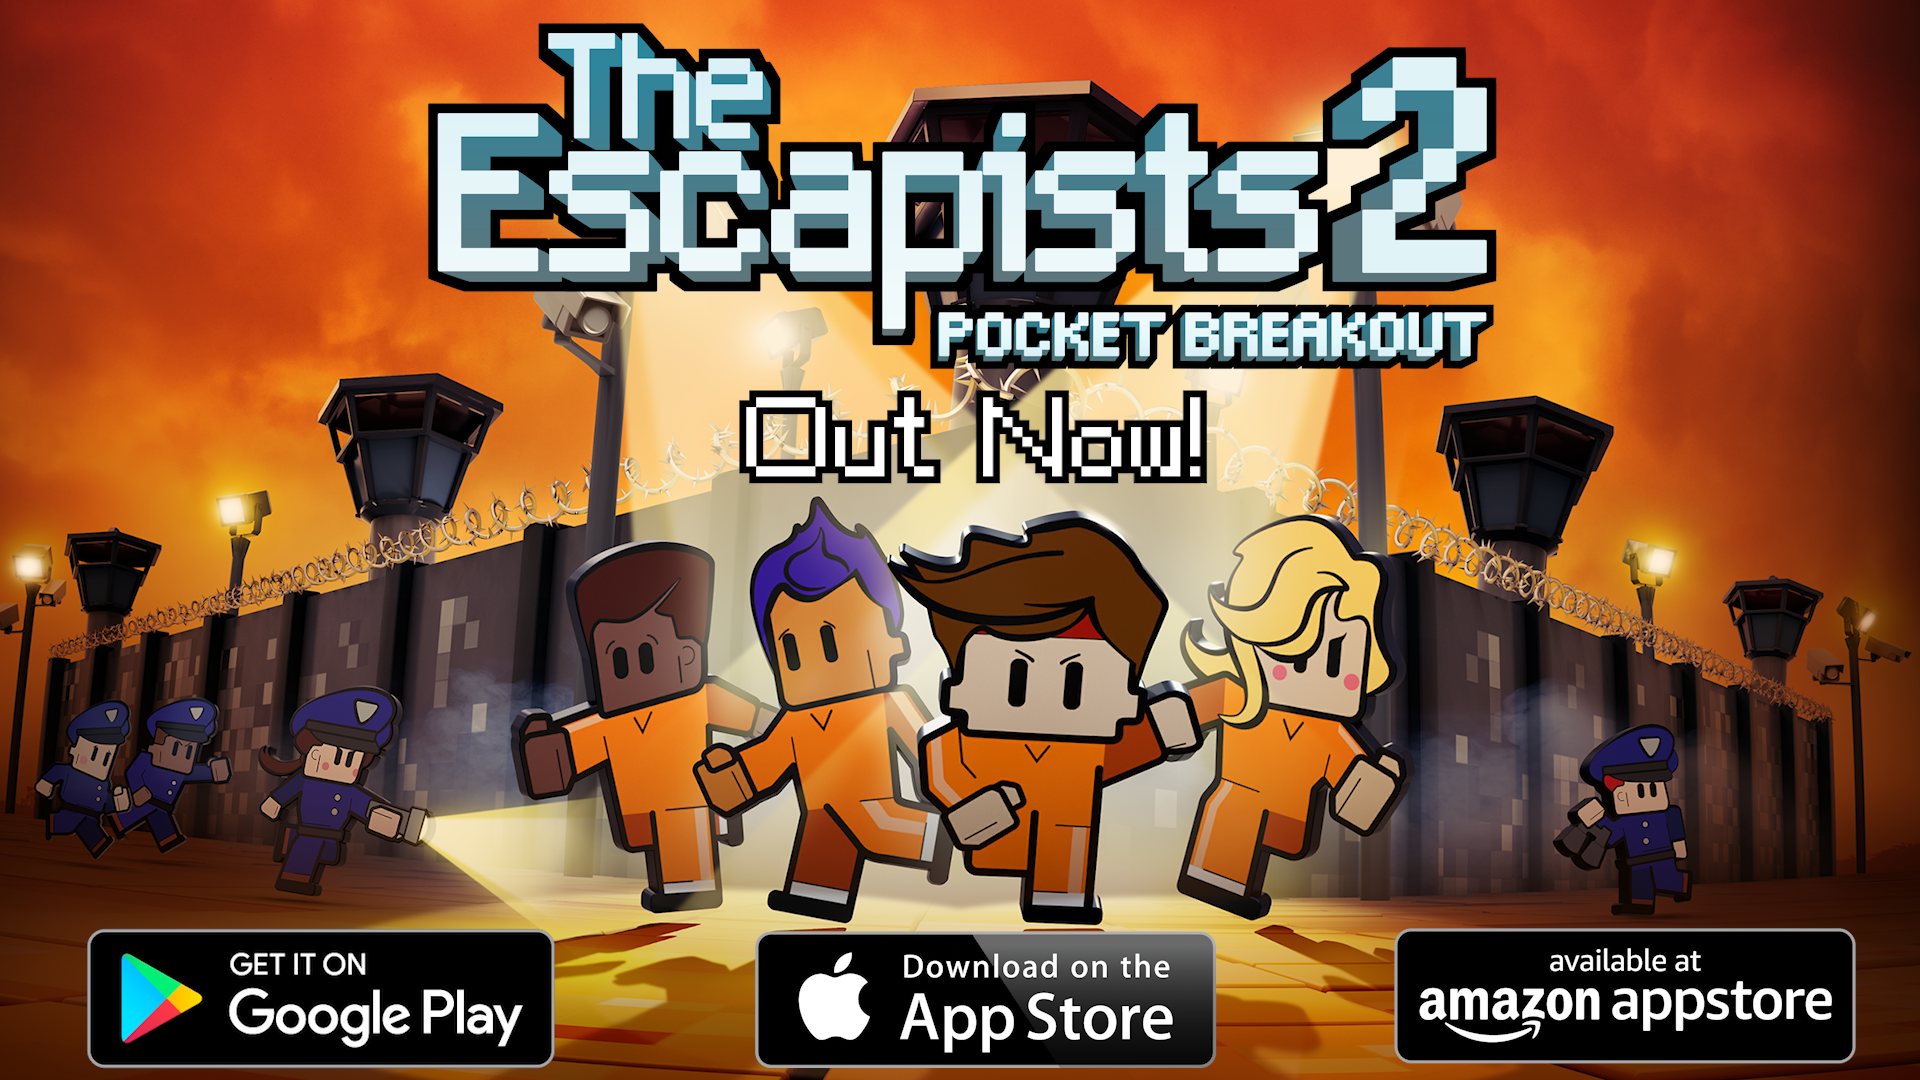 Escape Prison 2 - Adventure - Apps on Google Play